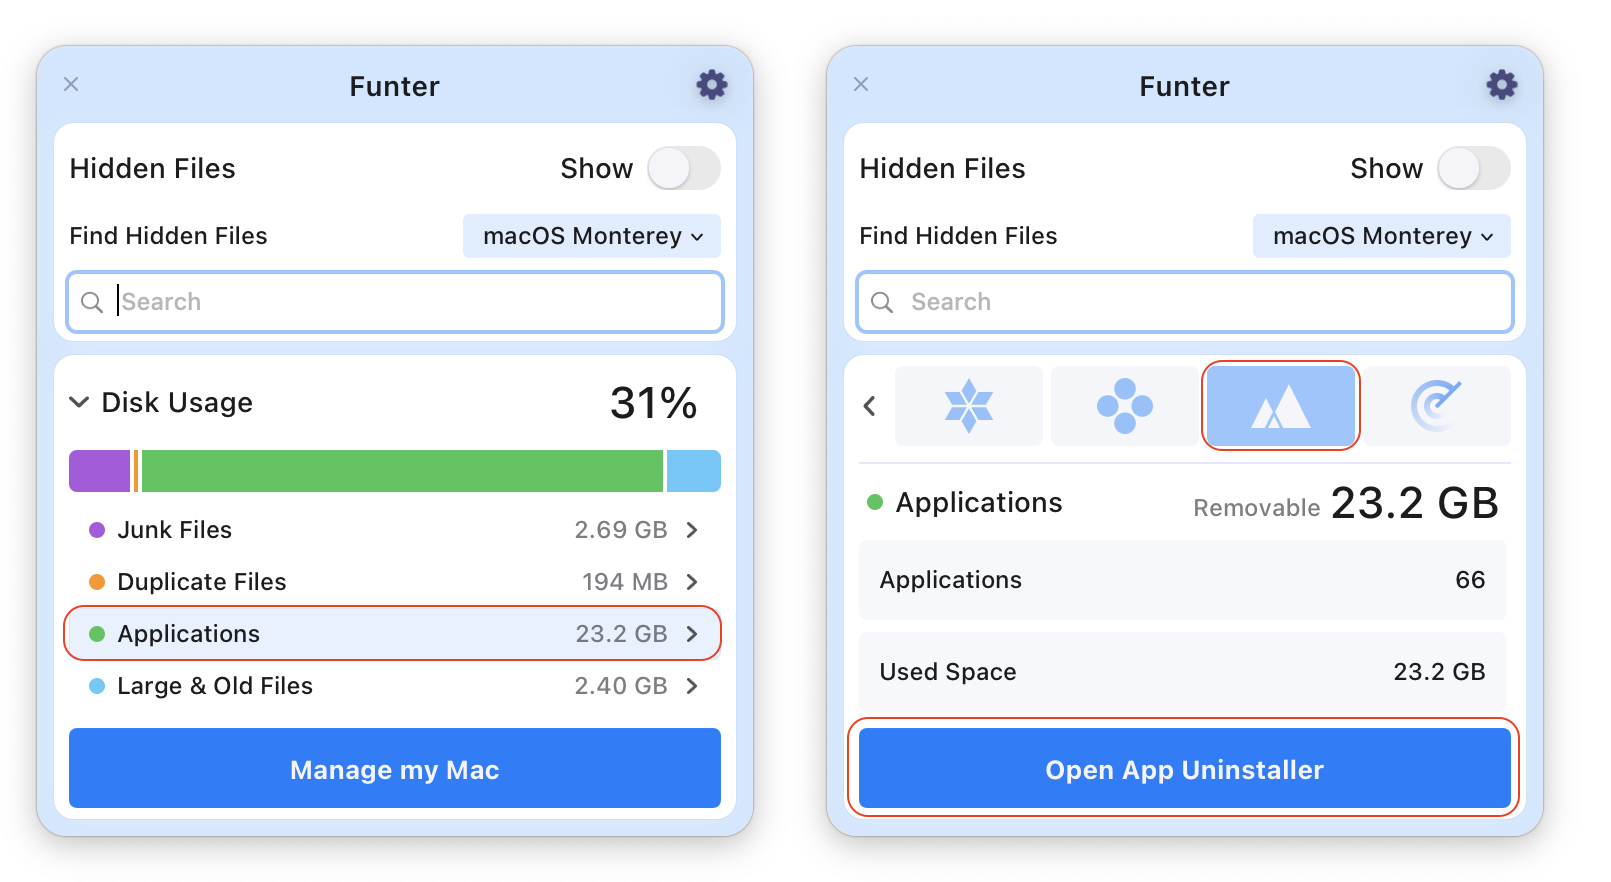 Funter window showing applications info